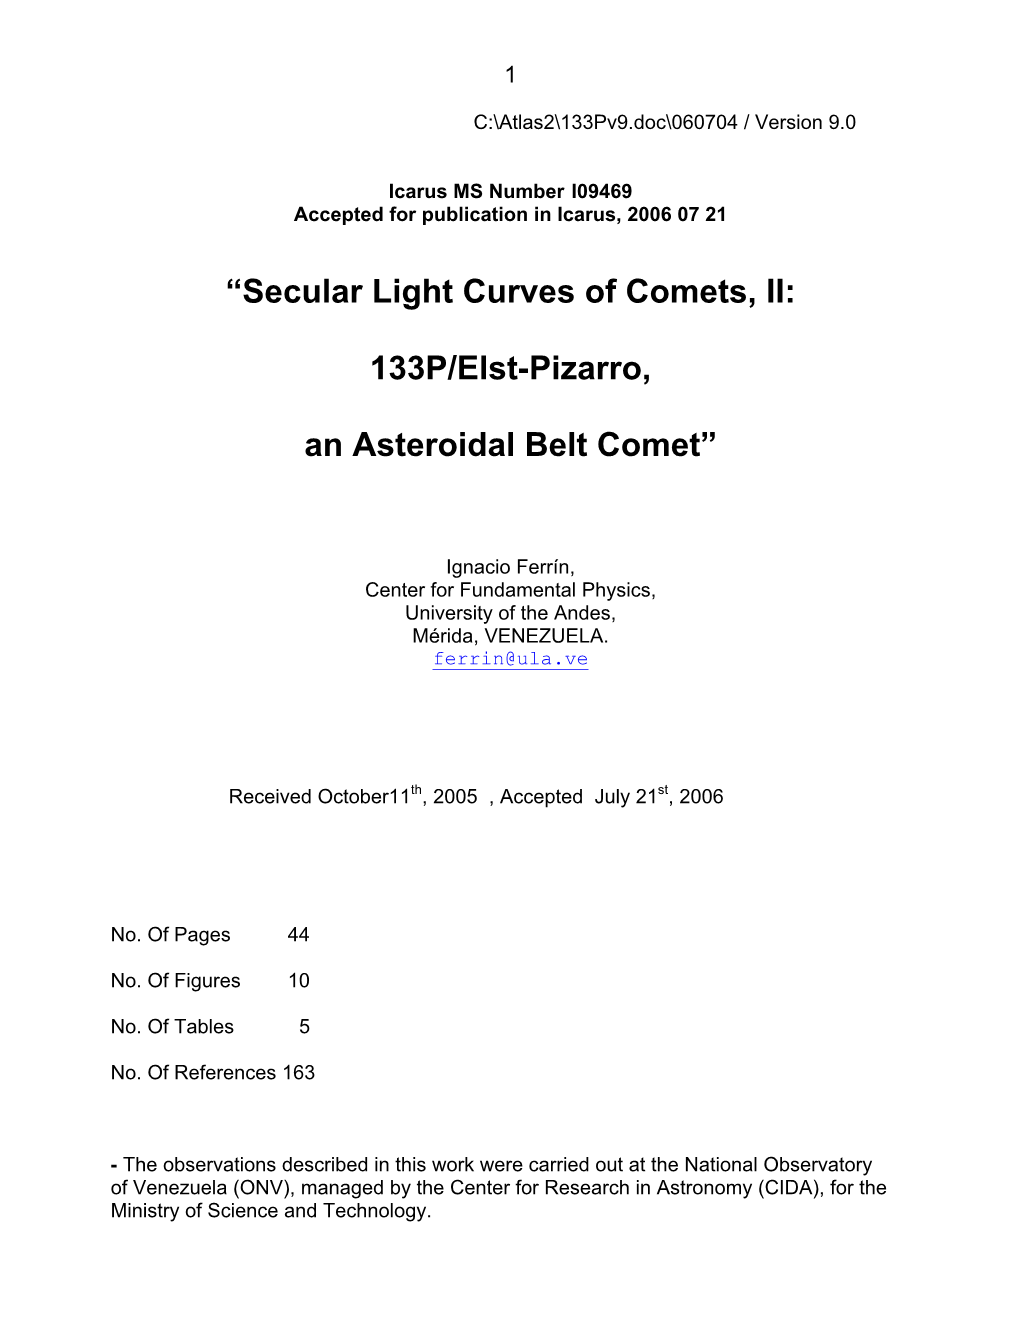 Secular Light Curves of Comets, II: 133P